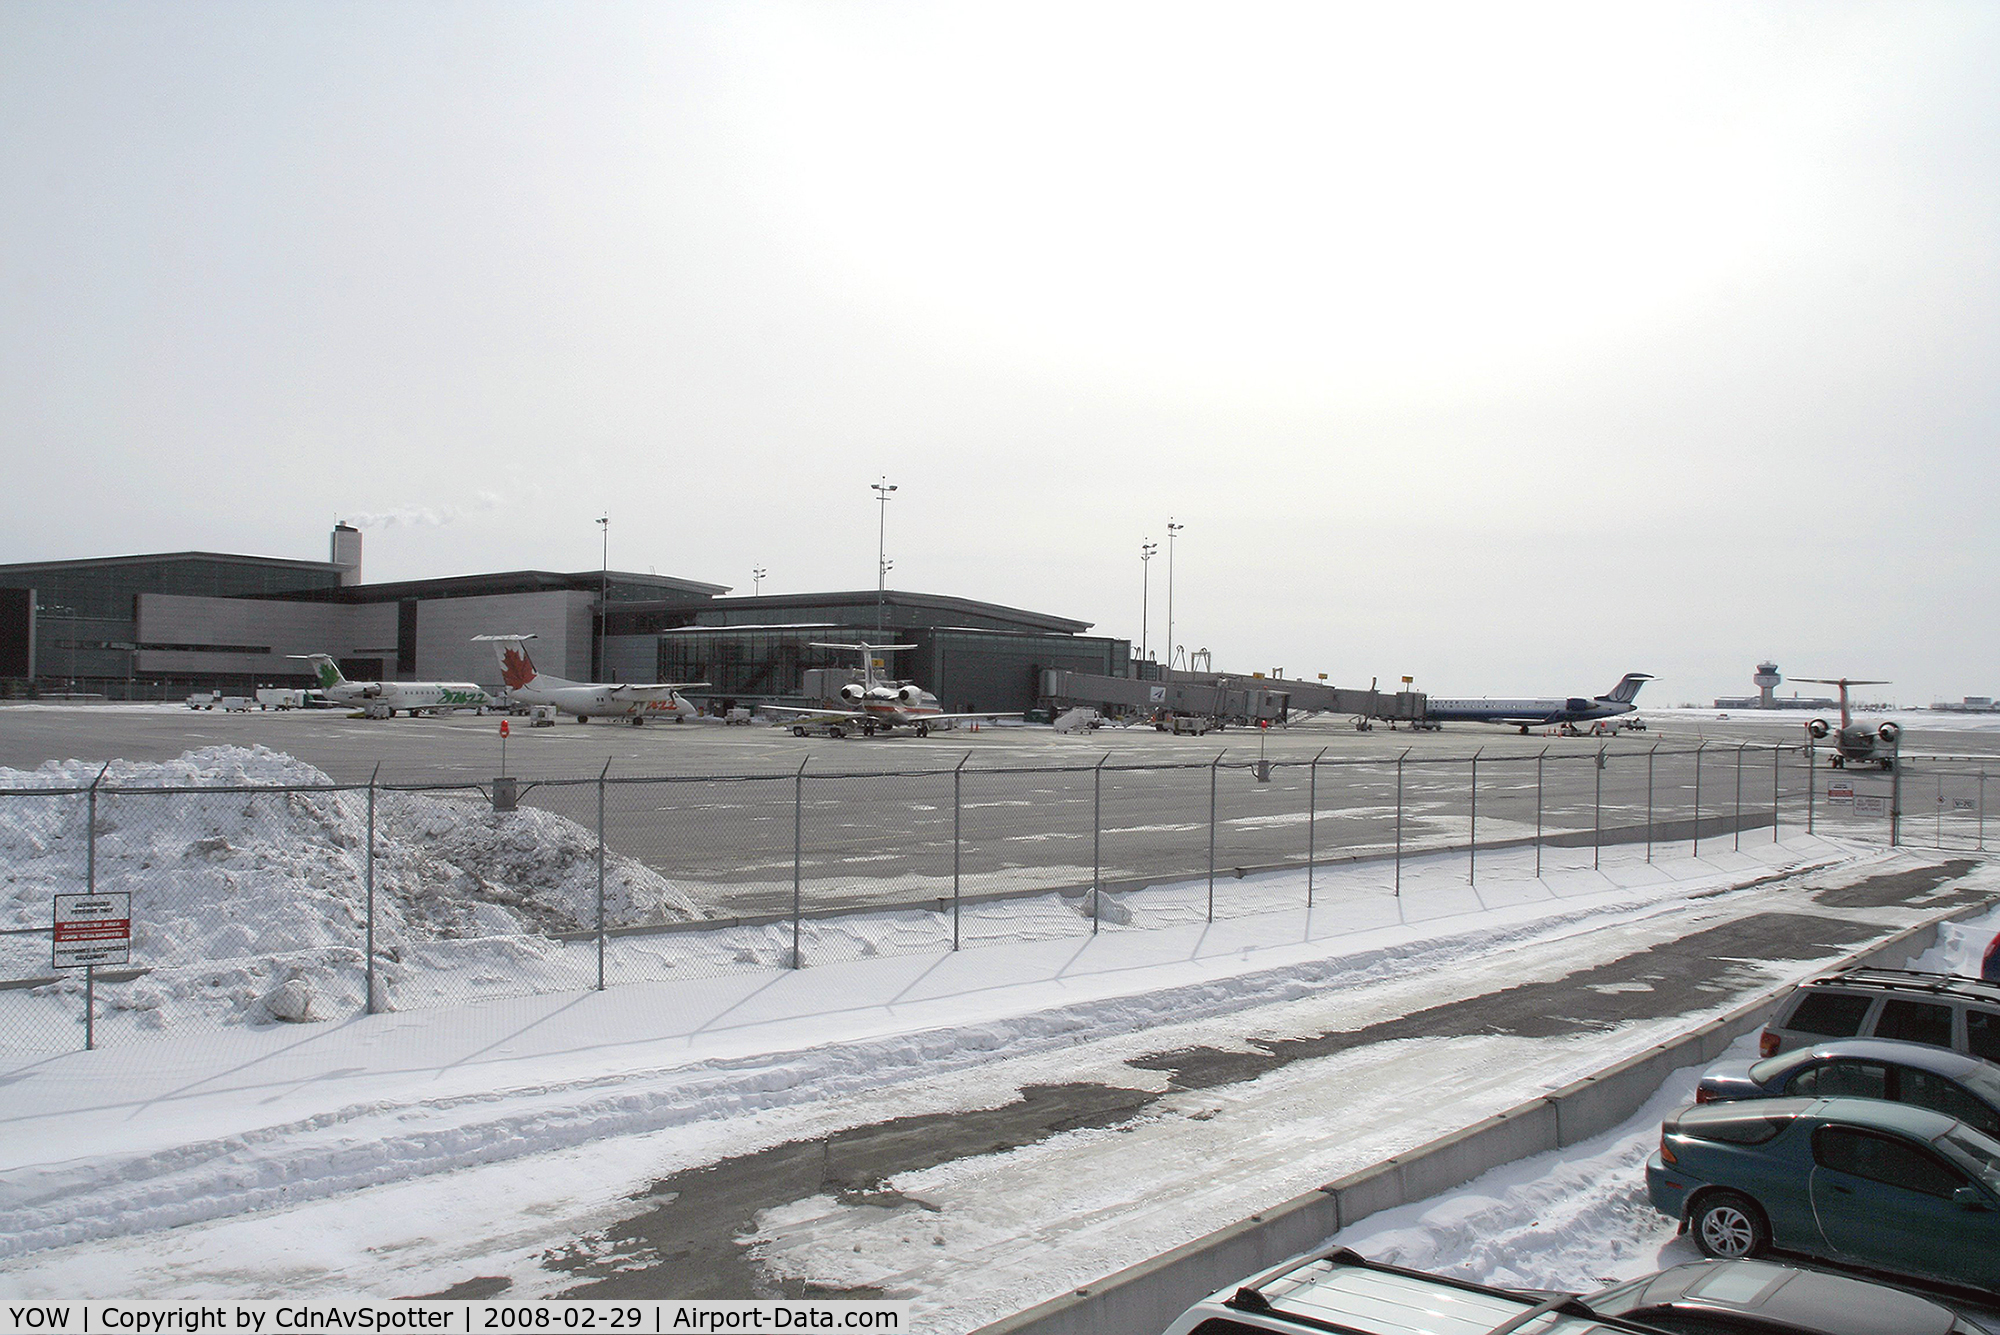 Ottawa Macdonald-Cartier International Airport (Macdonald-Cartier International Airport), Ottawa, Ontario Canada (YOW) - New Terminal Building at YOW - US Departures Gates 1 to 10